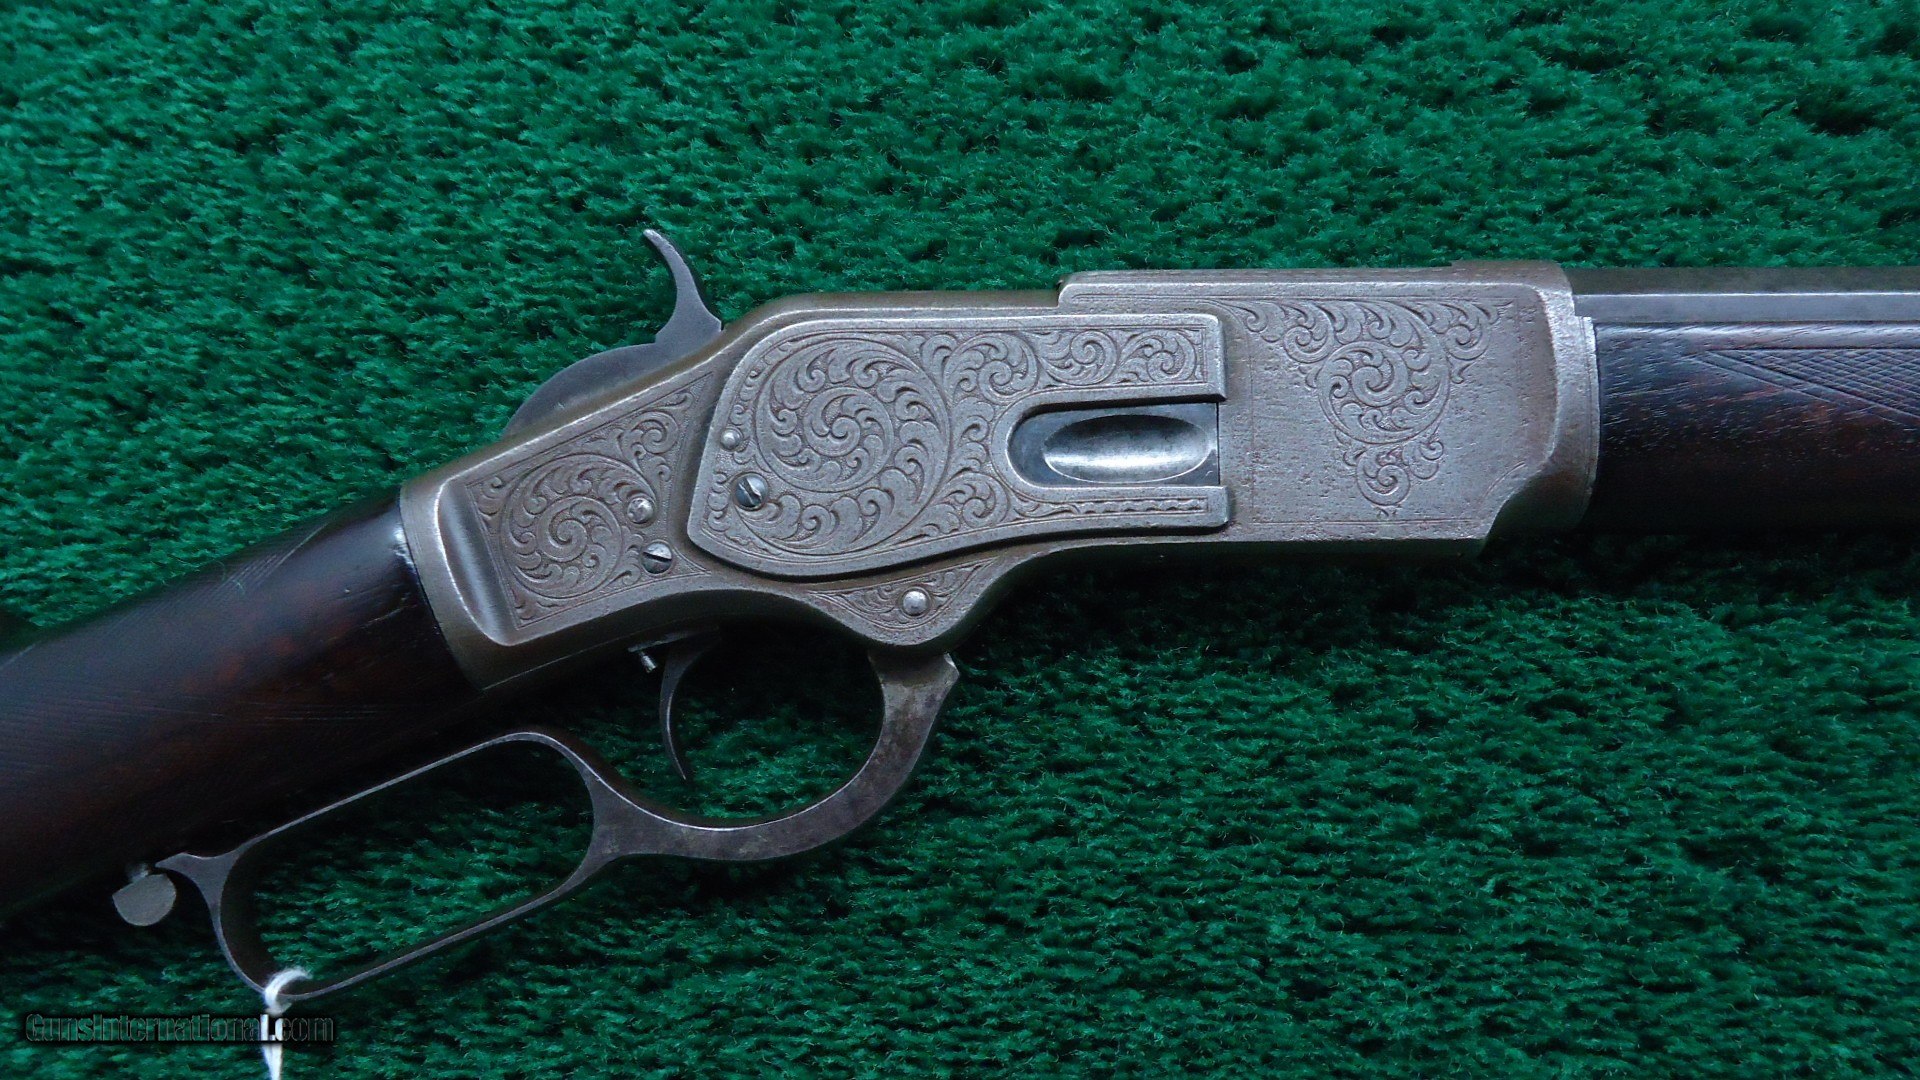 Winchester model 1873 value